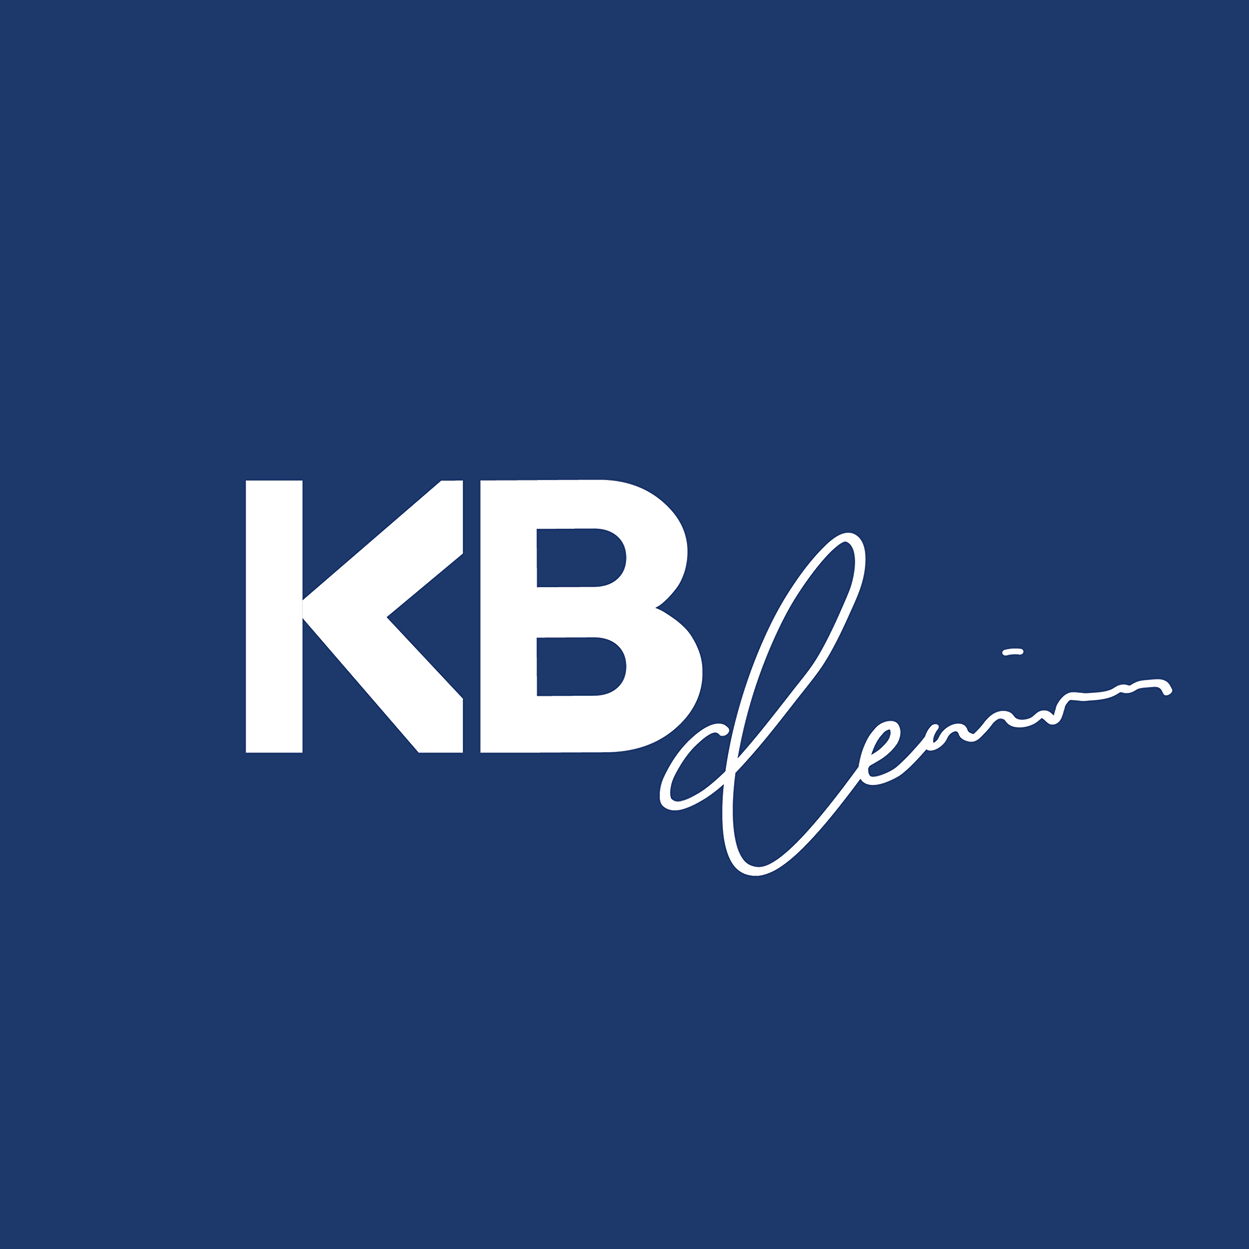 KBDenim Company